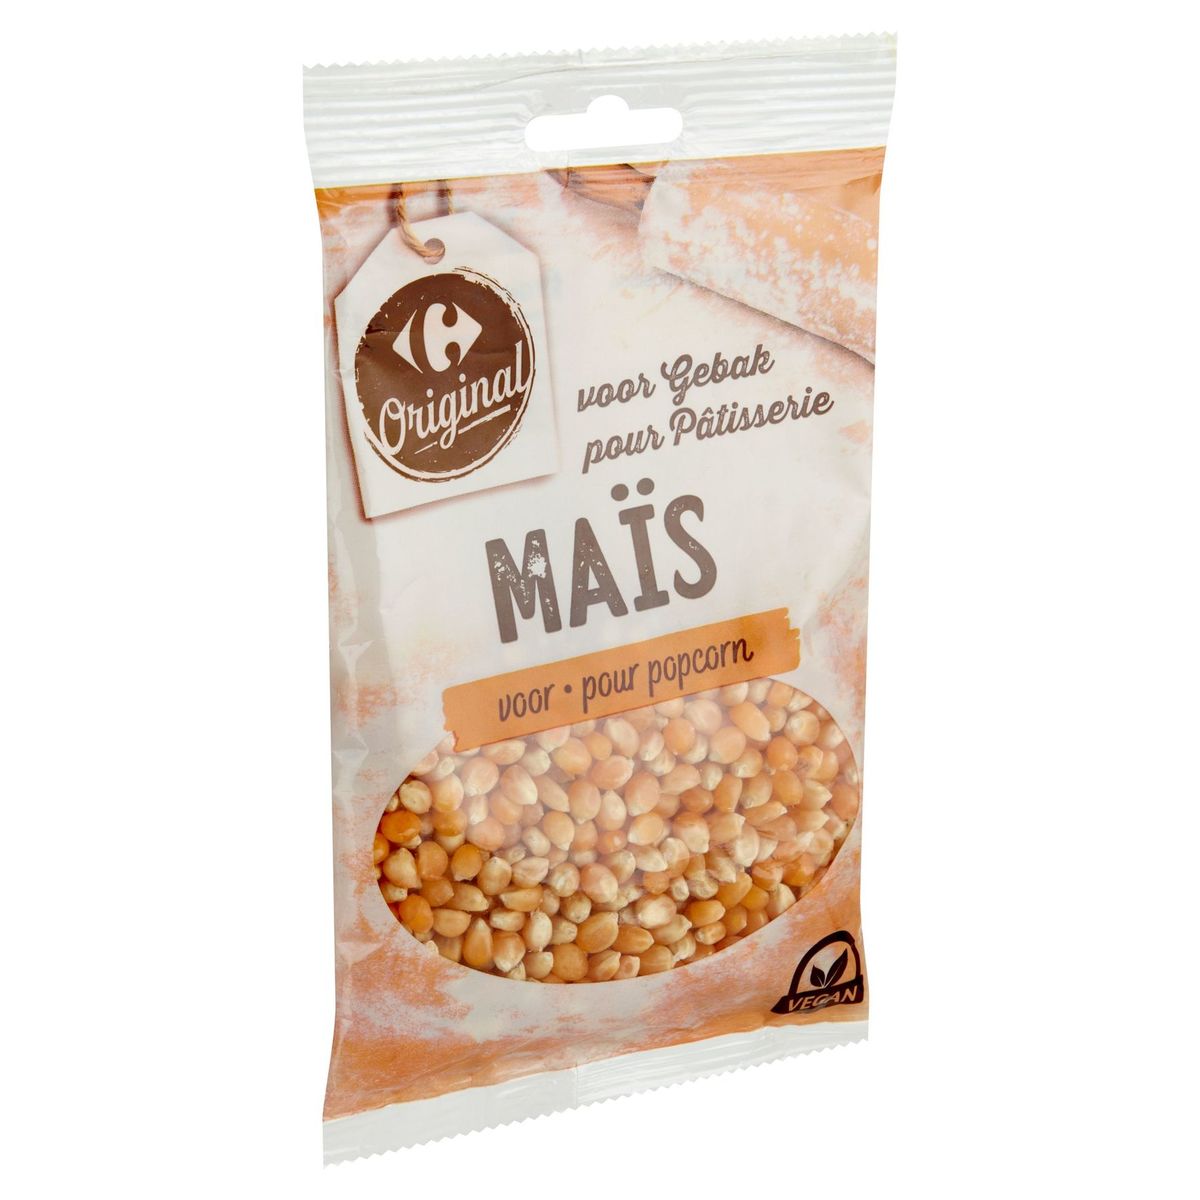 Carrefour Original Maïs voor Popcorn 125 g